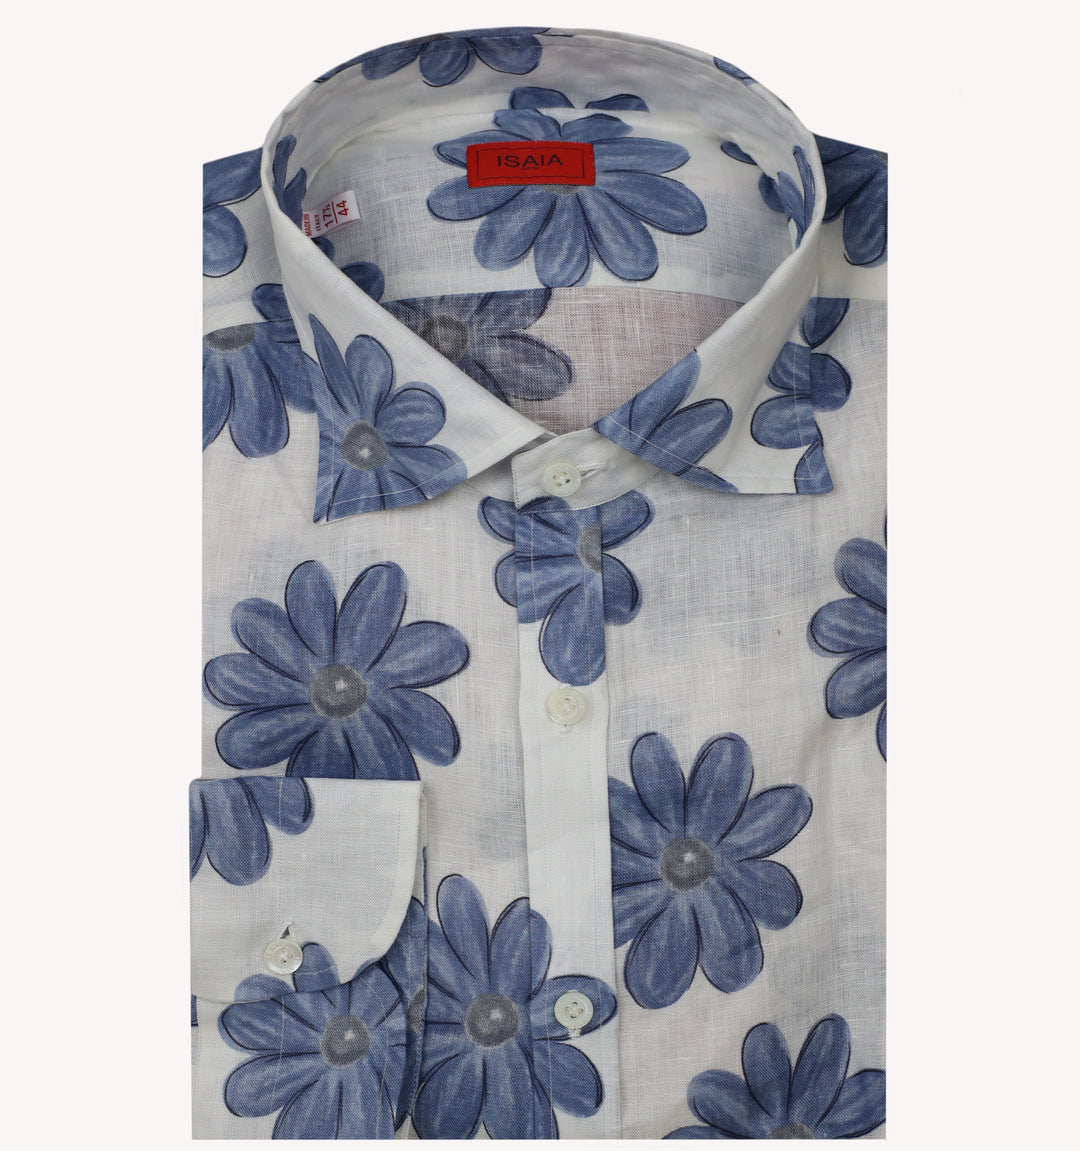 Isaia Flower Sport Shirt in Blue White